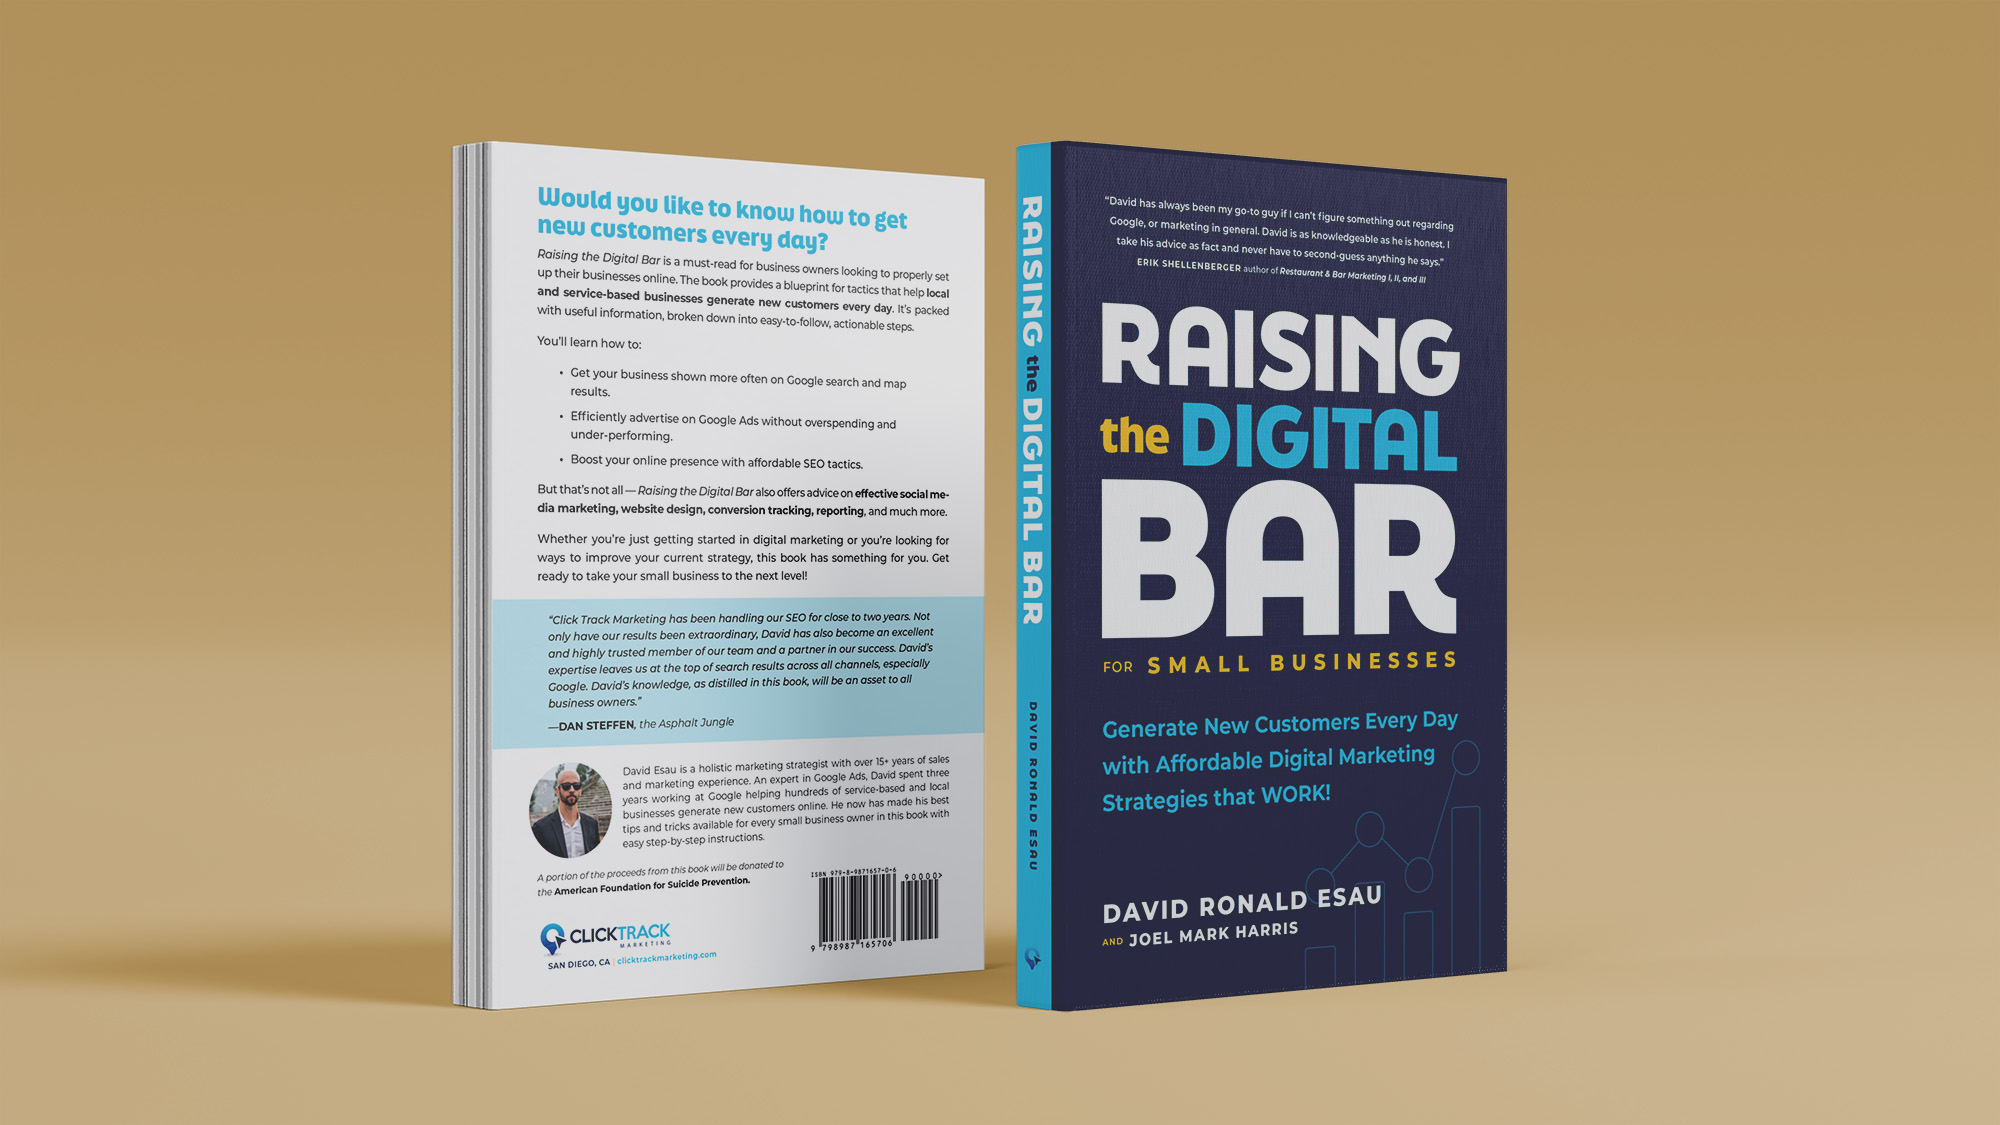 Raising the digital bar - marketing book for small businesses